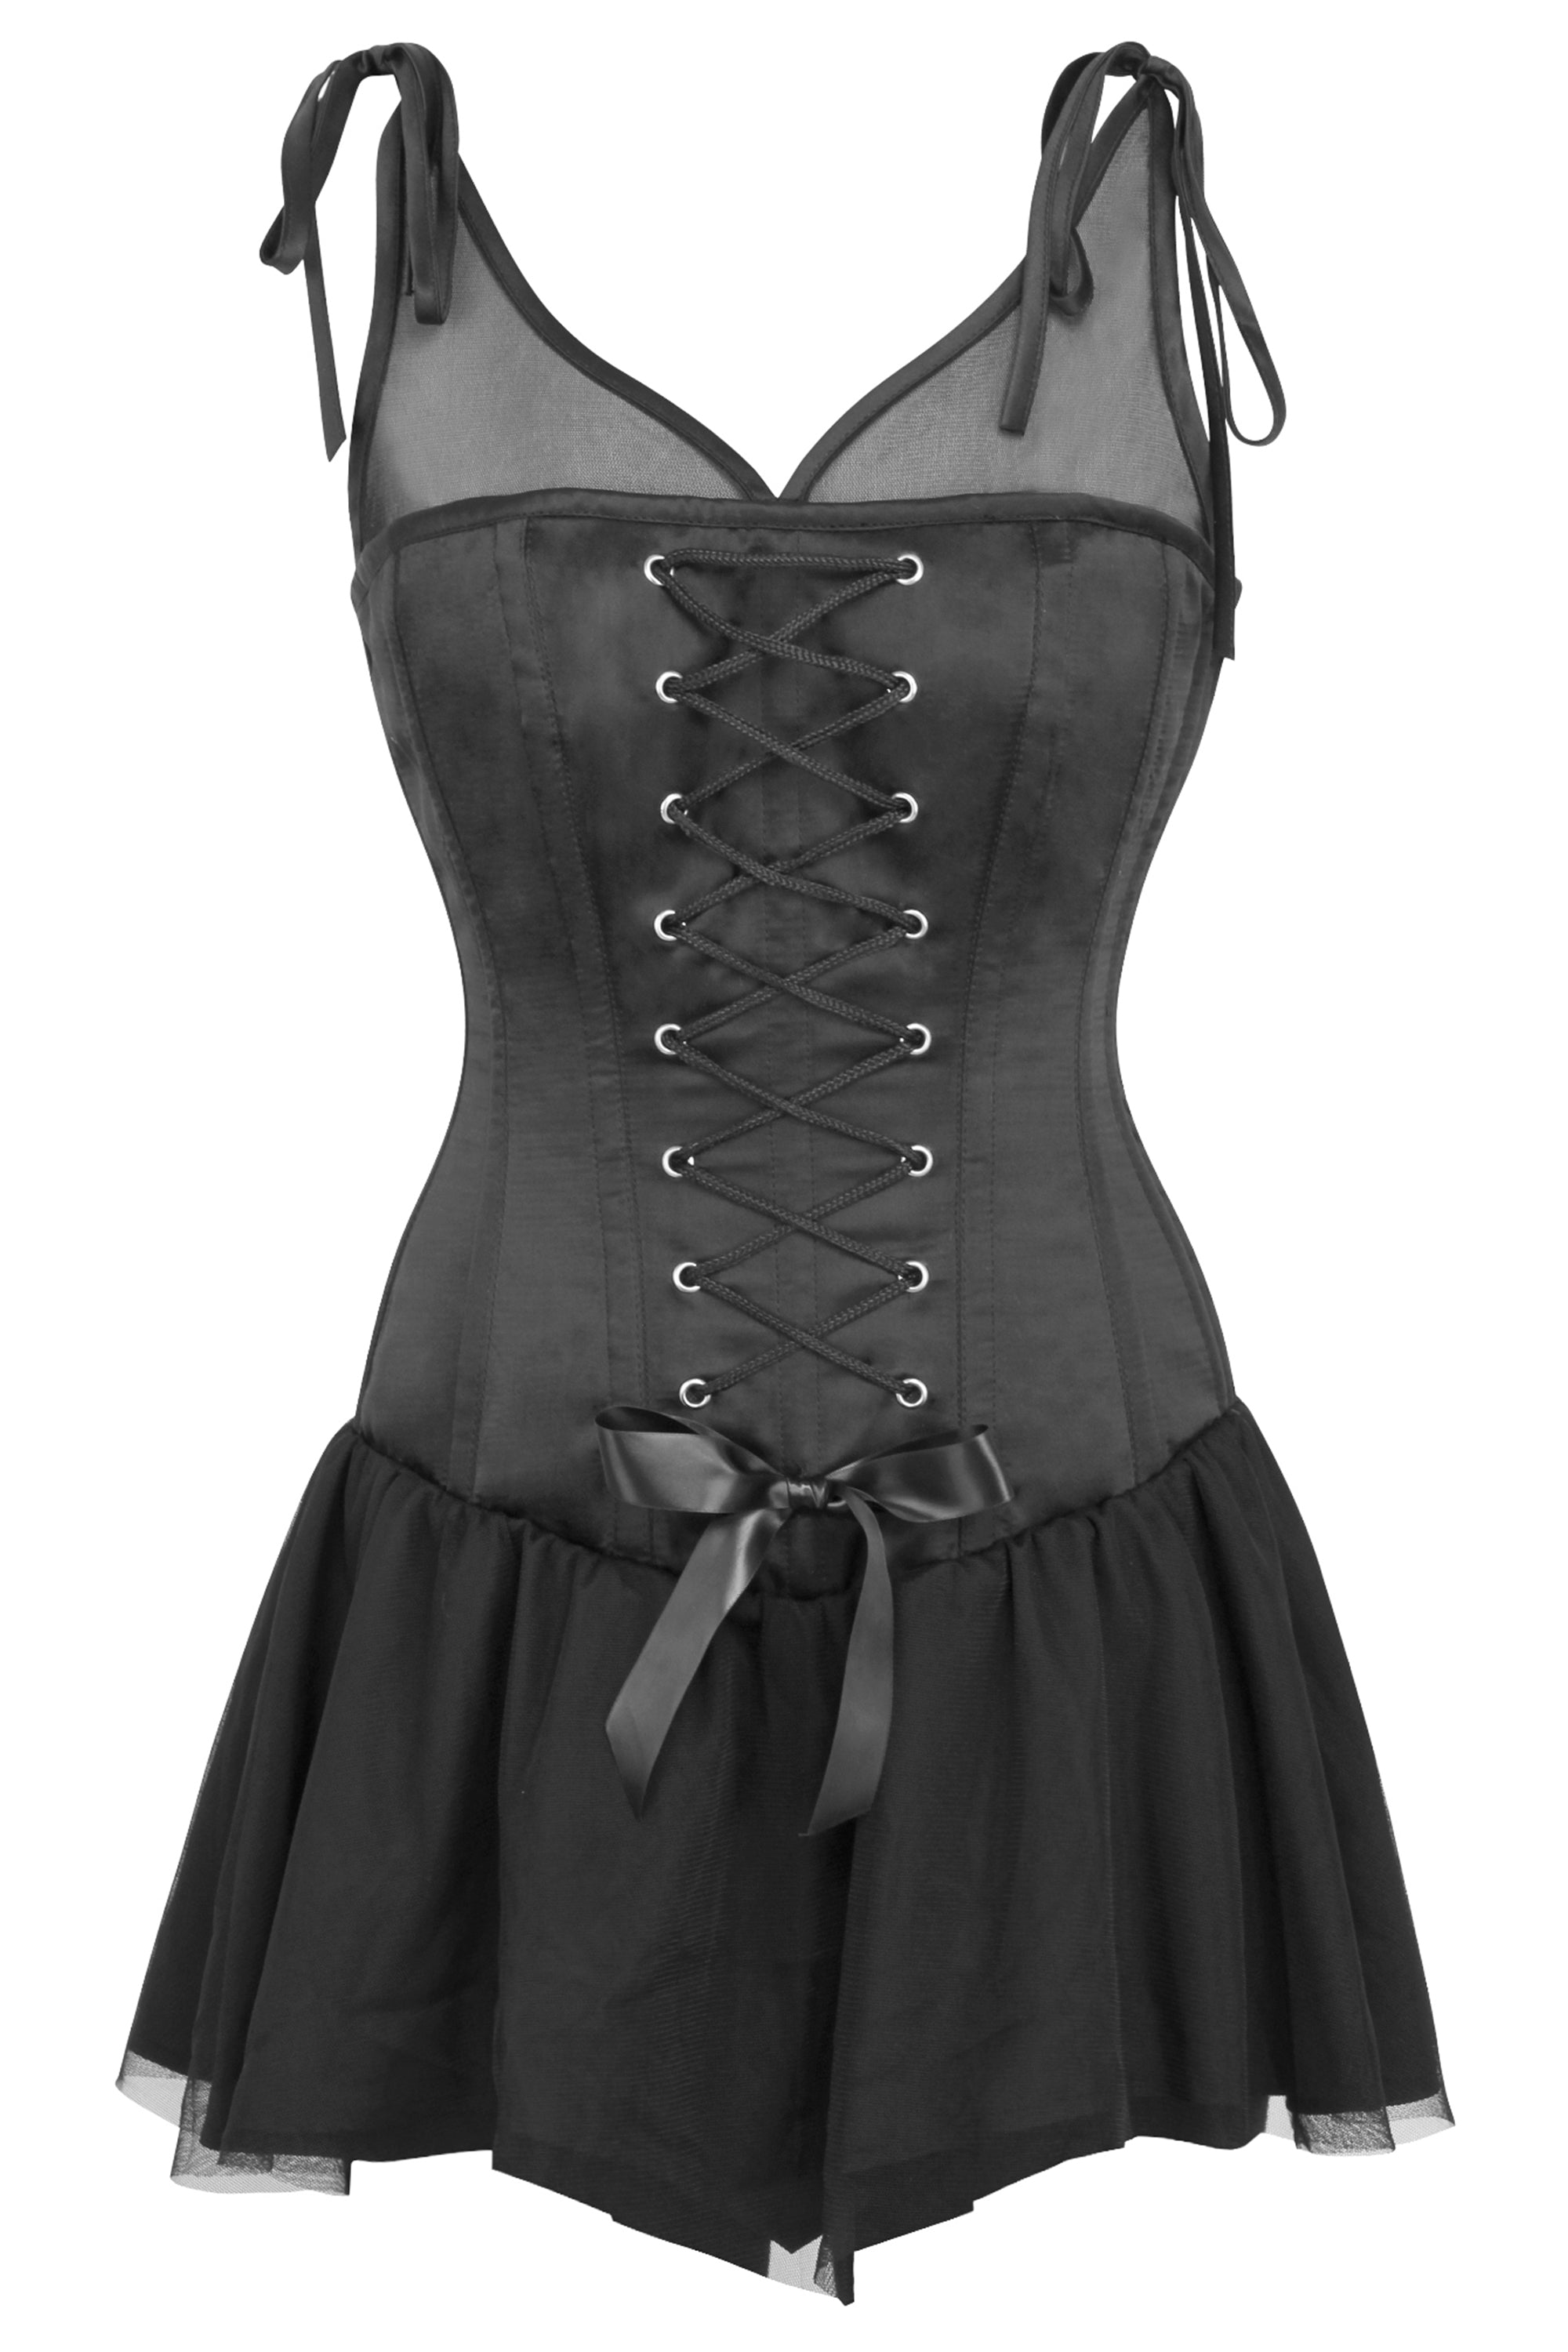 Short Gothic Corset Dress